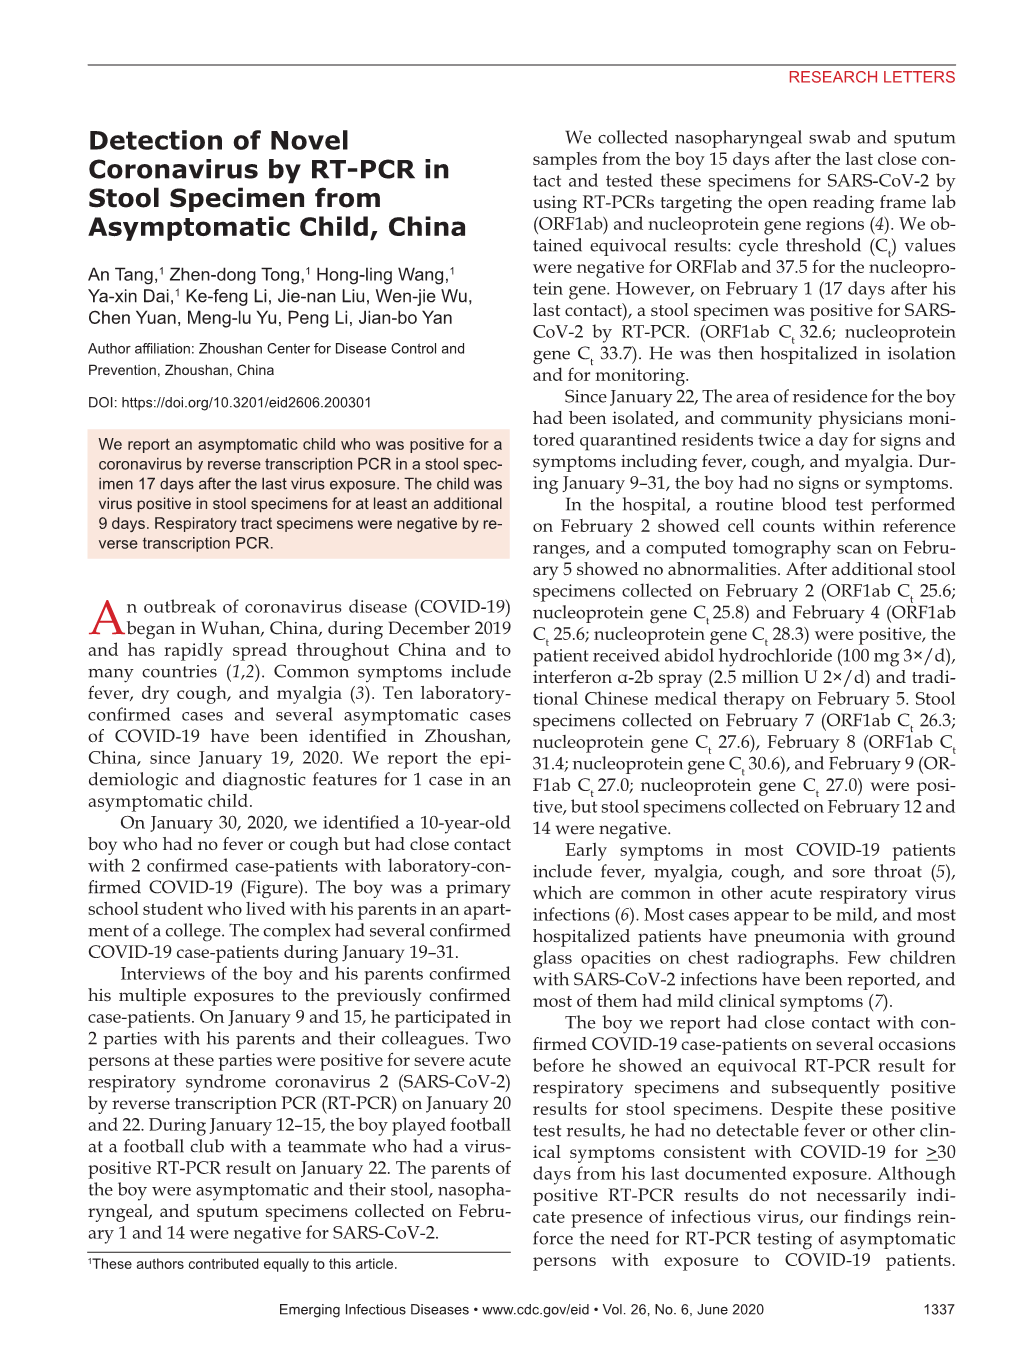 Detection of Novel Coronavirus by RT-PCR in Stool Specimen from Asymptomatic Child, China, January 9–February 14, 2020